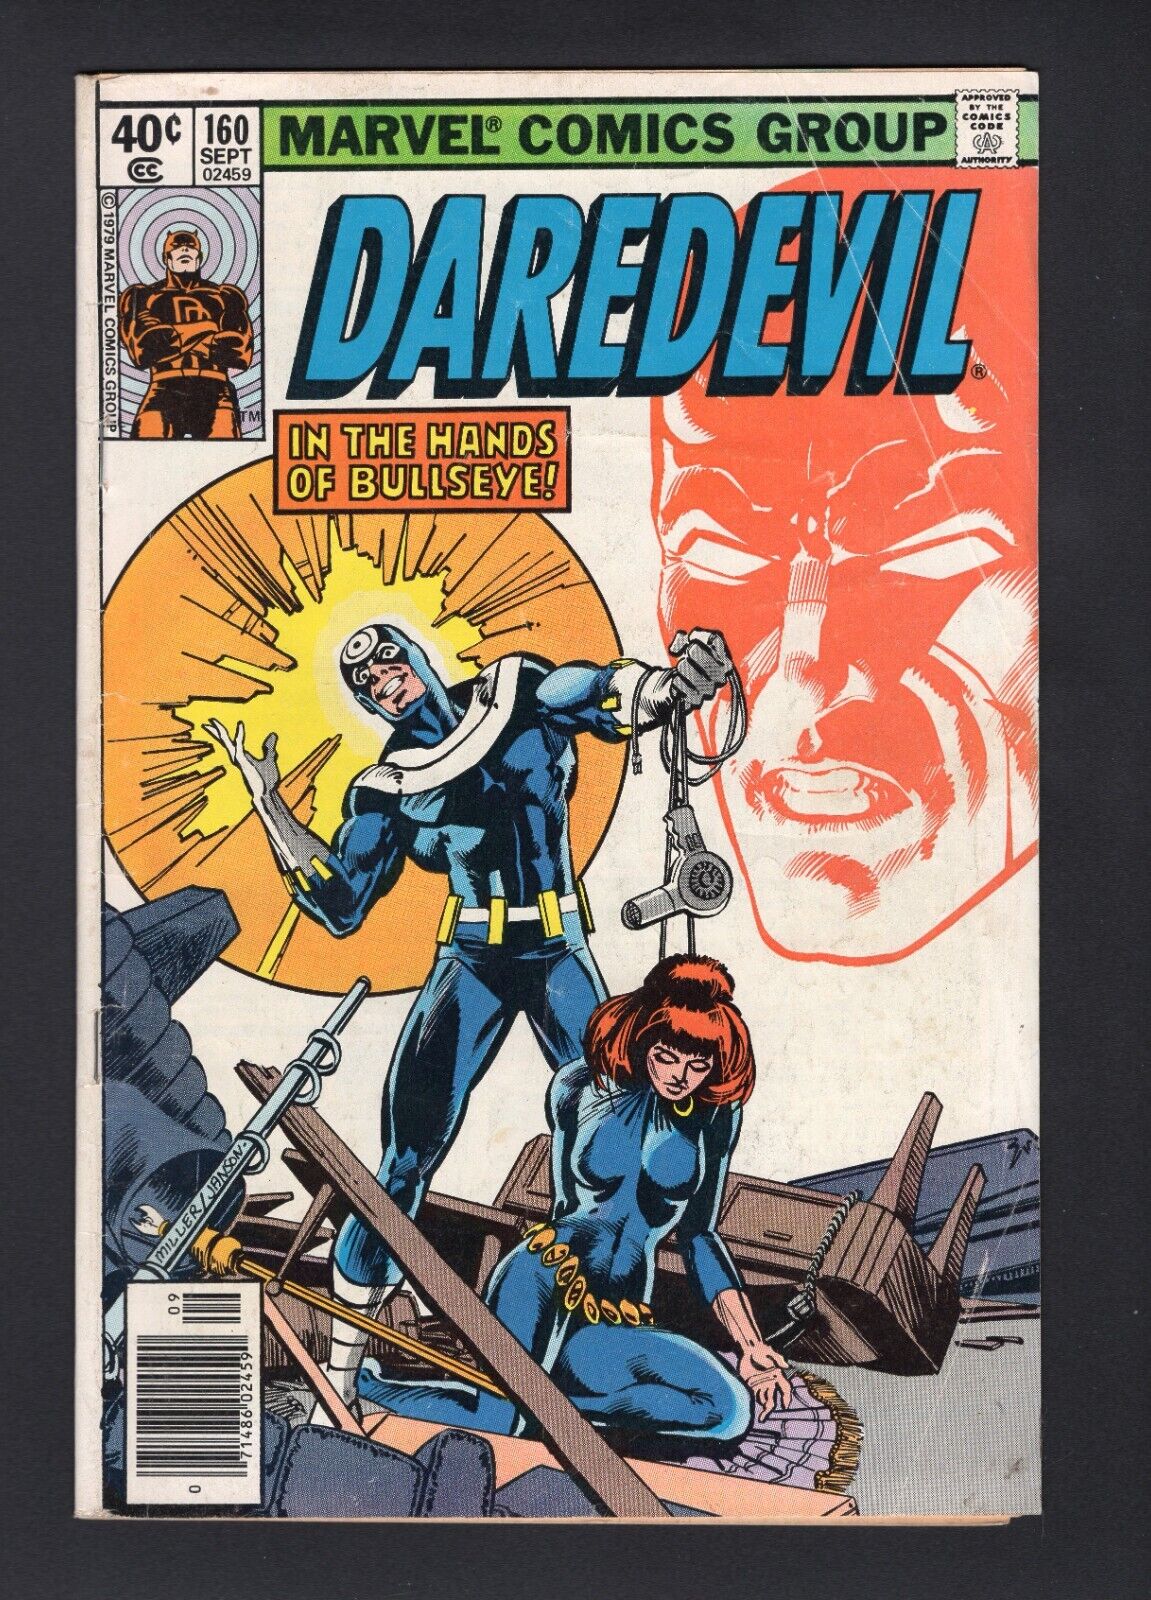 Daredevil #160 Vol. 1 Cover Art by Frank Miller Marvel Comics '79 VG/FN